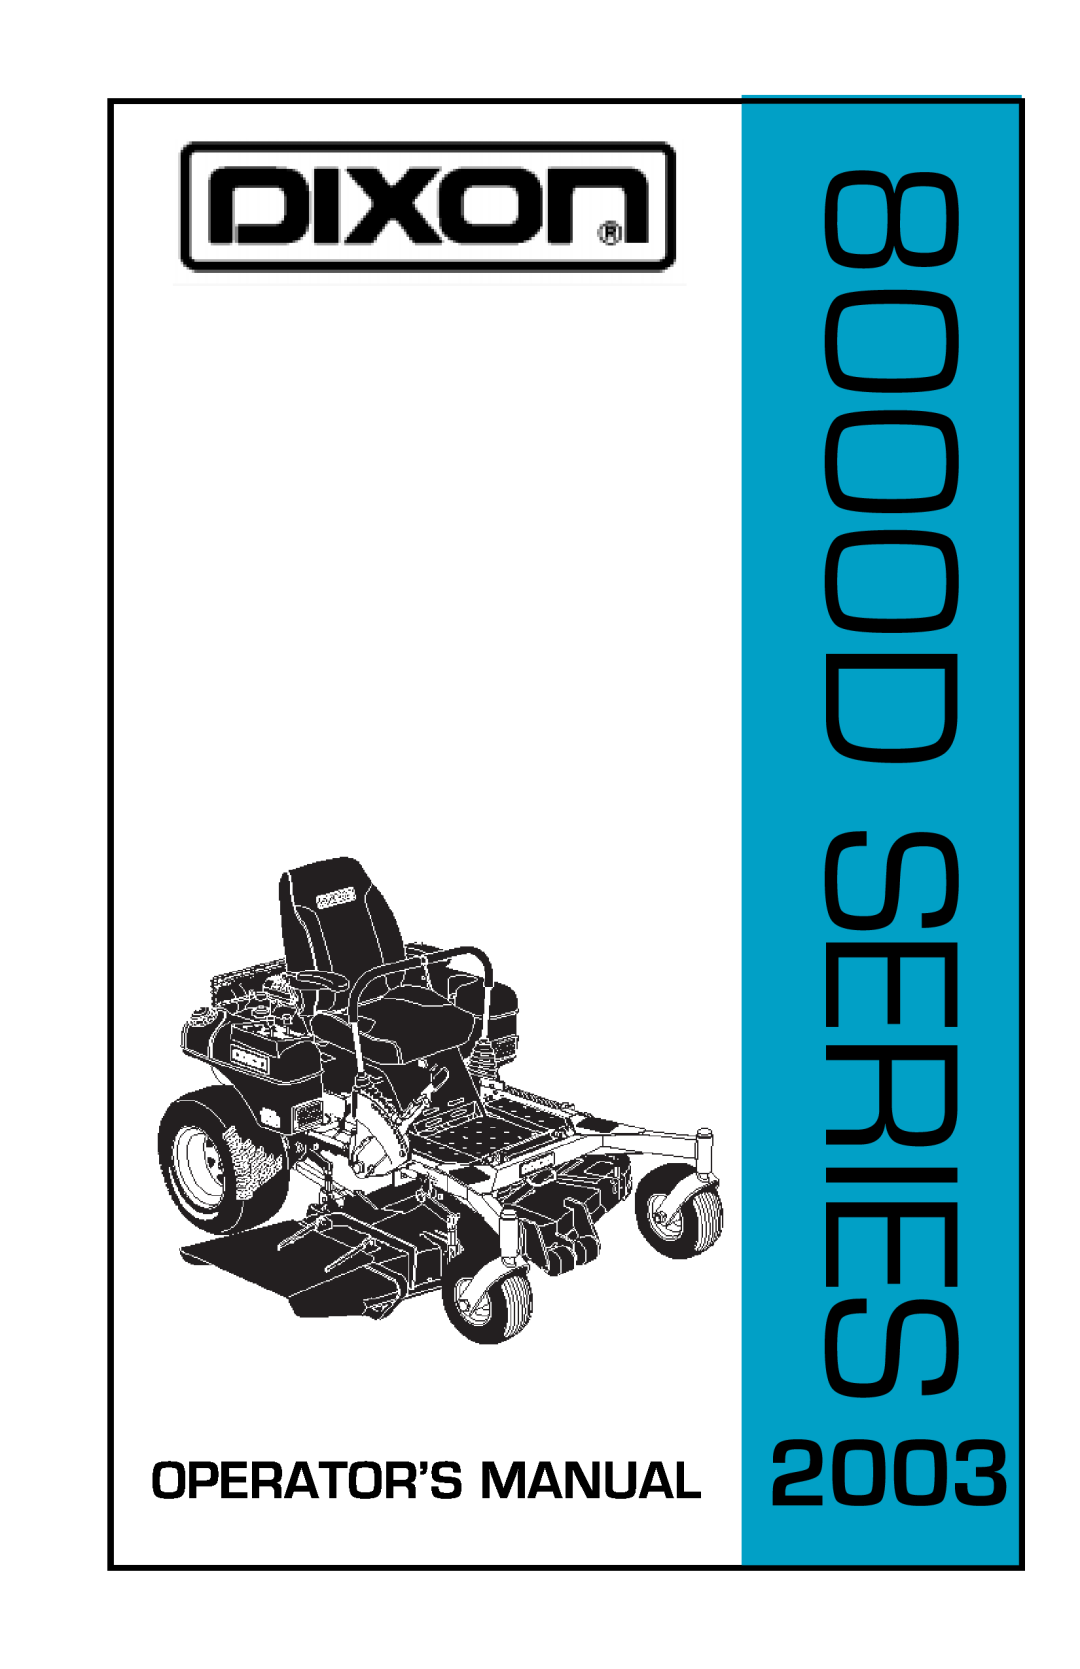 Dixon manual 8000D SERIES, 2003, Operator’S Manual 